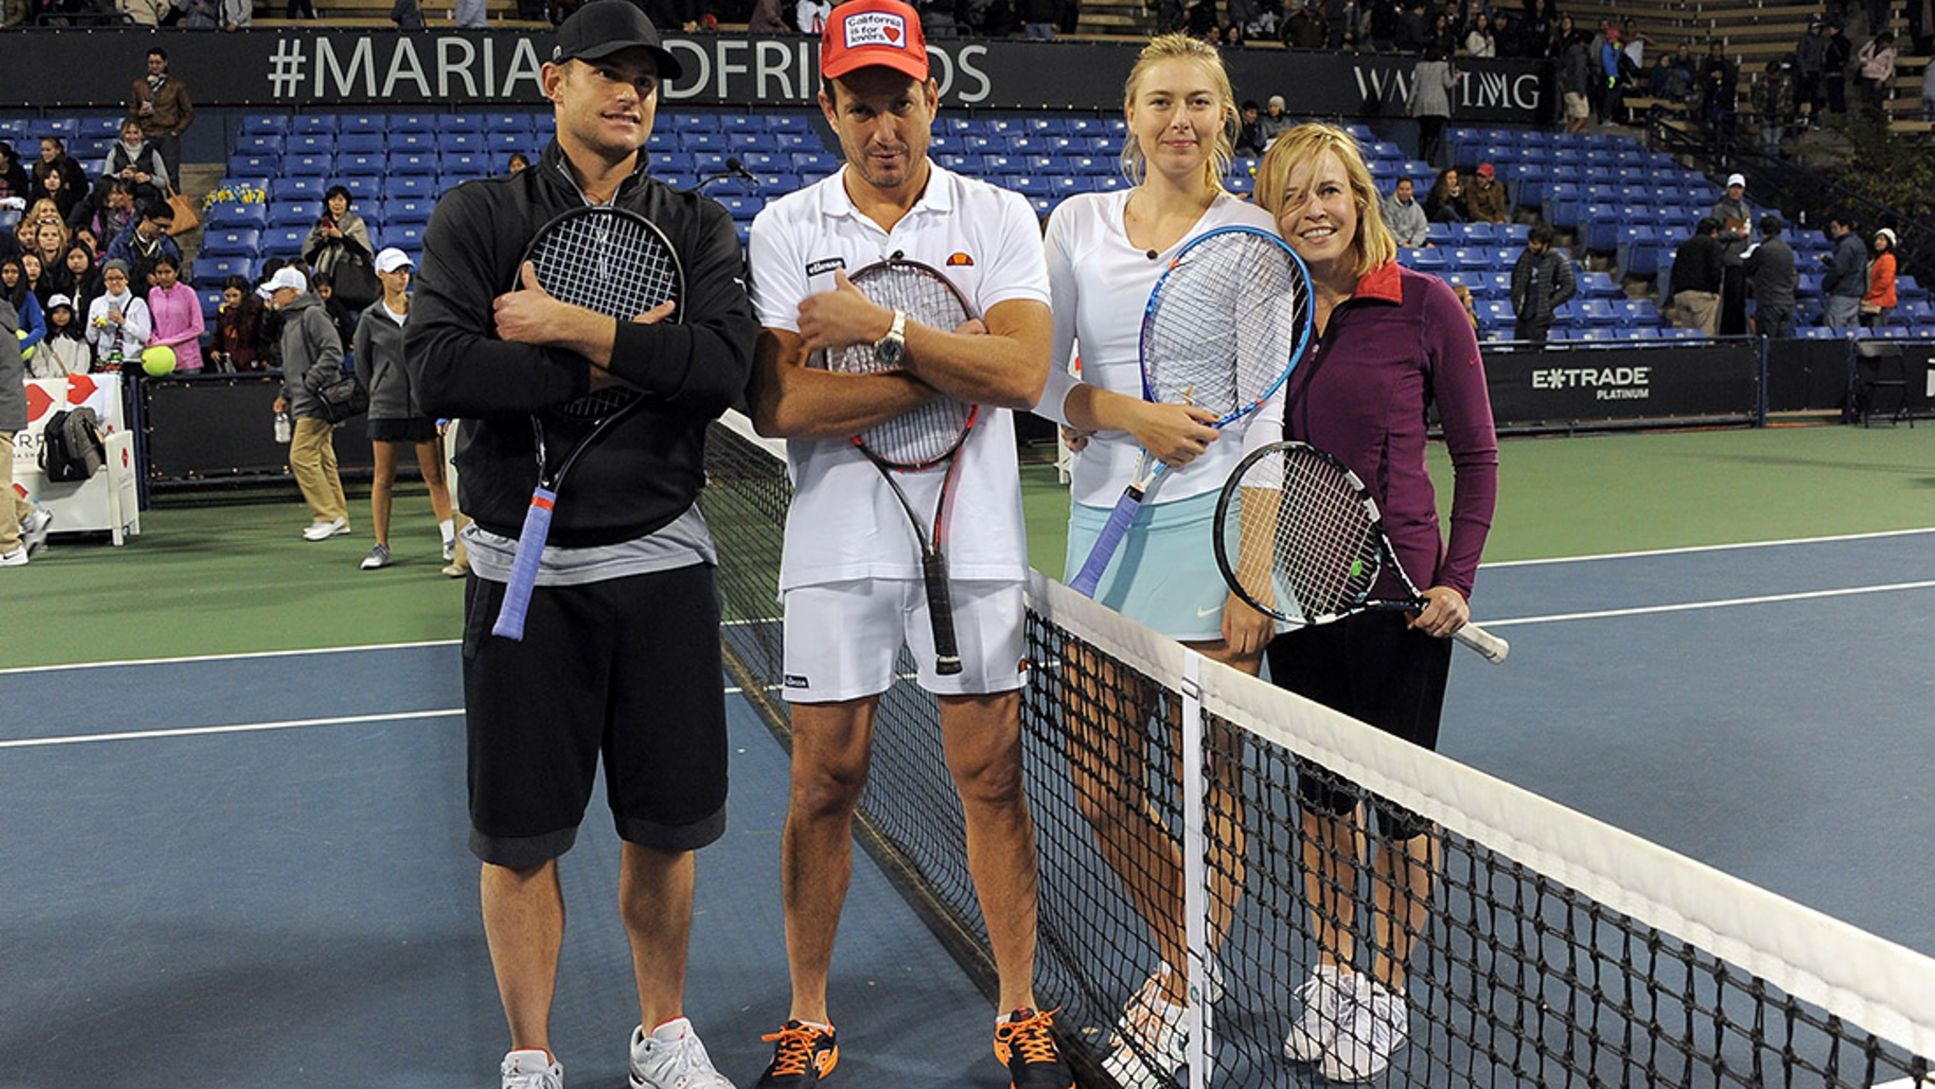 l-r Andy Roddick (USA), Will Arnett (Kanada), Maria Sharapova, Chelsea Handler (USA), Maria Sharapova & Friends, Los Angeles, 2015, Porsche AG